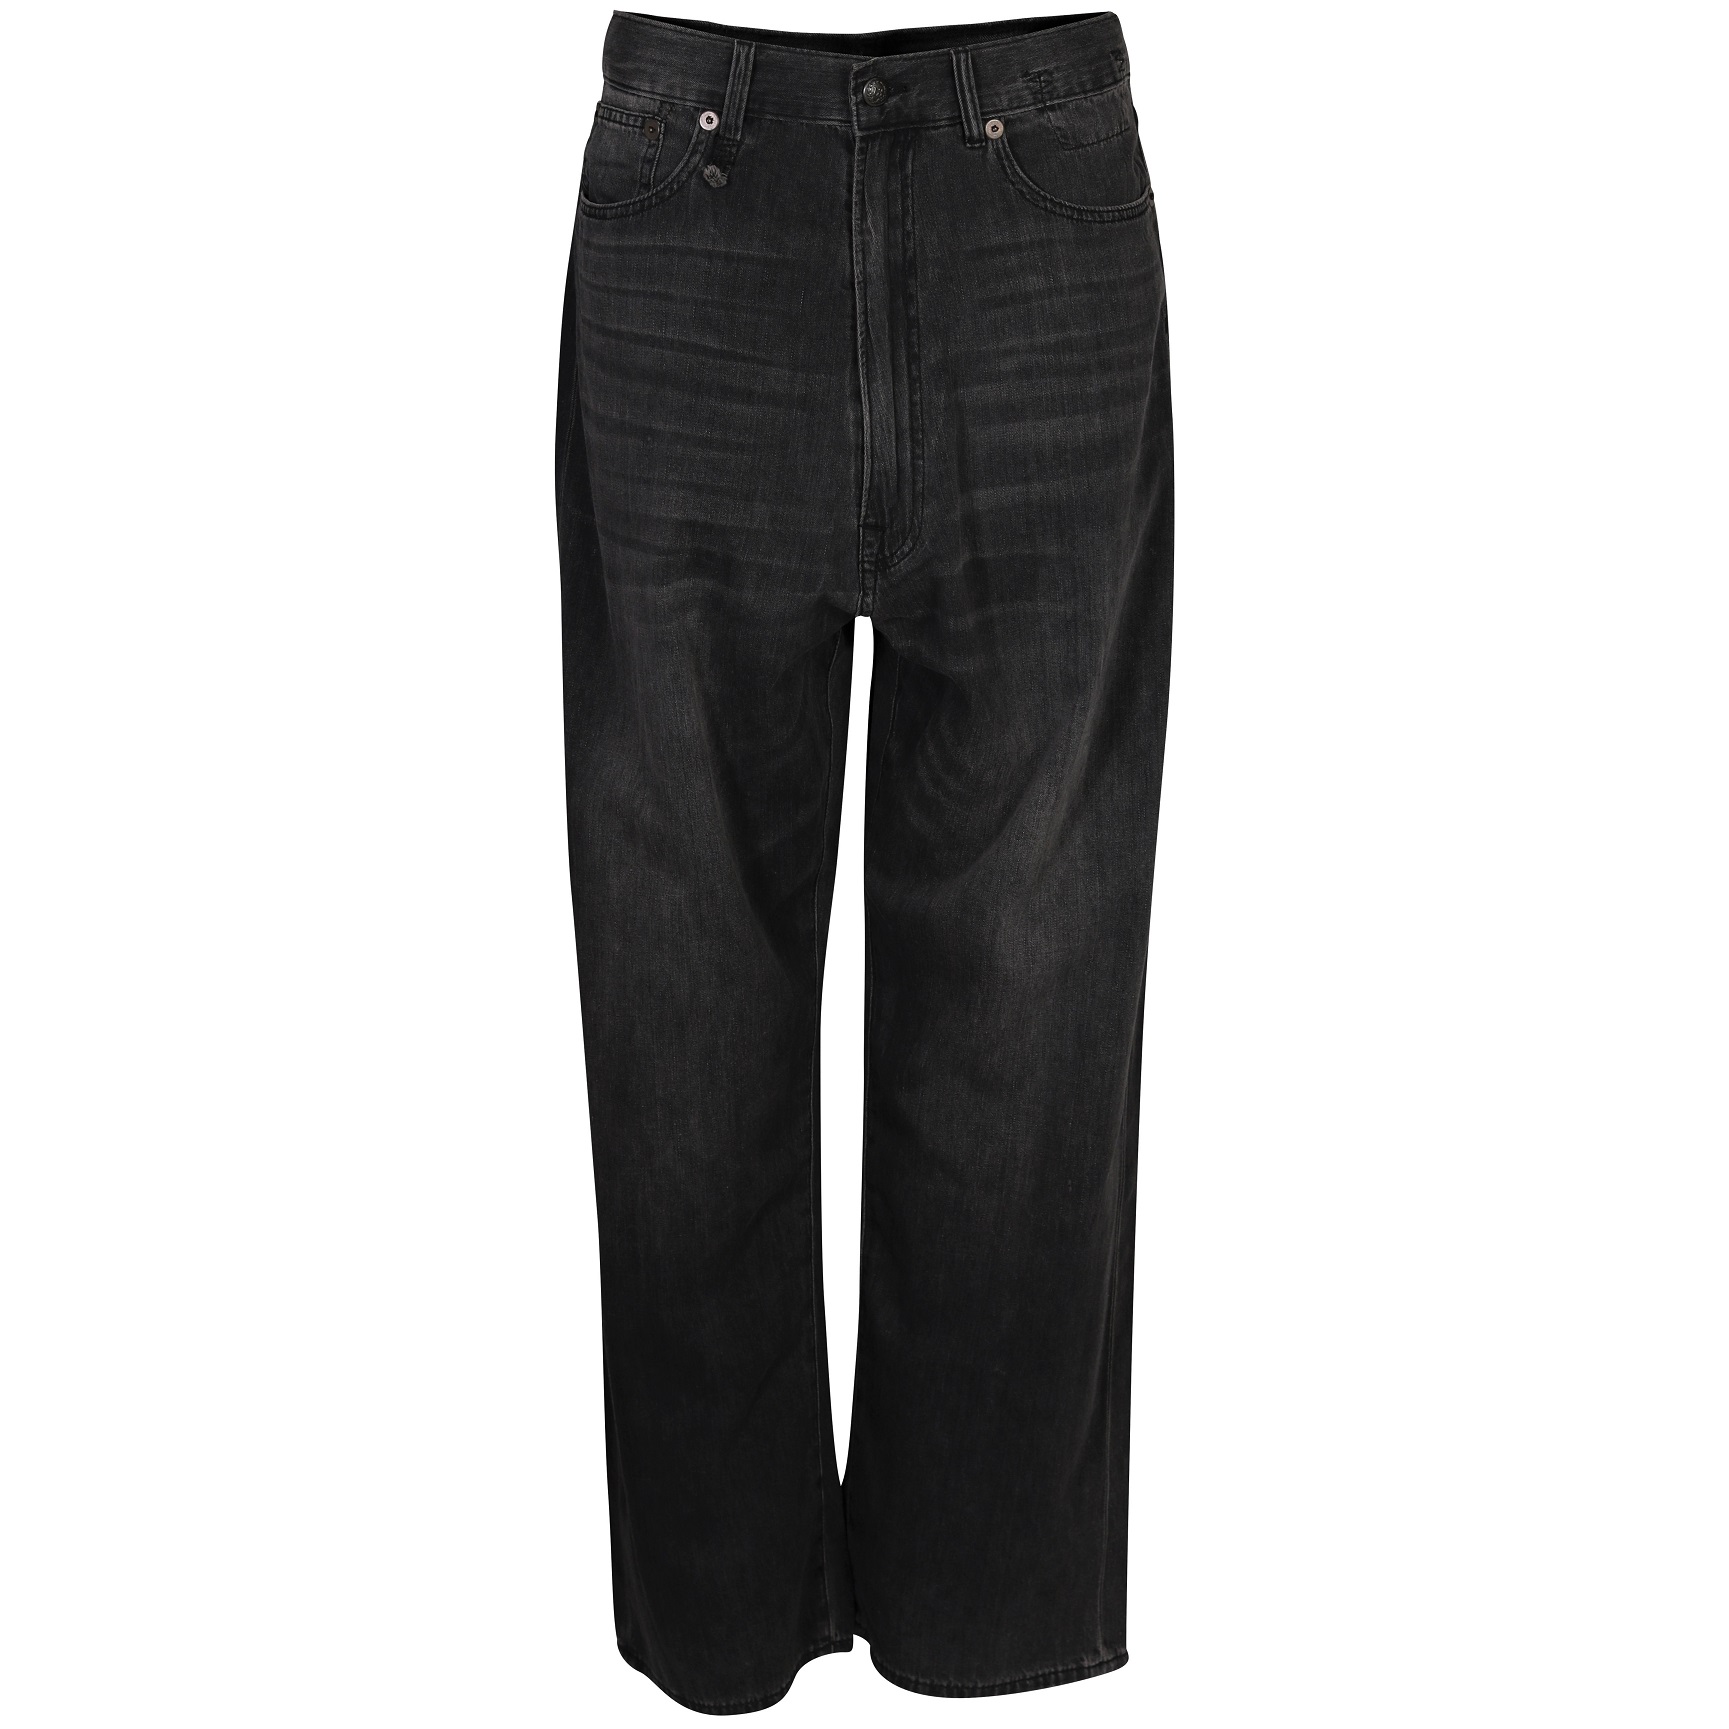 R13 Venti Jeans in Elmore Black 25